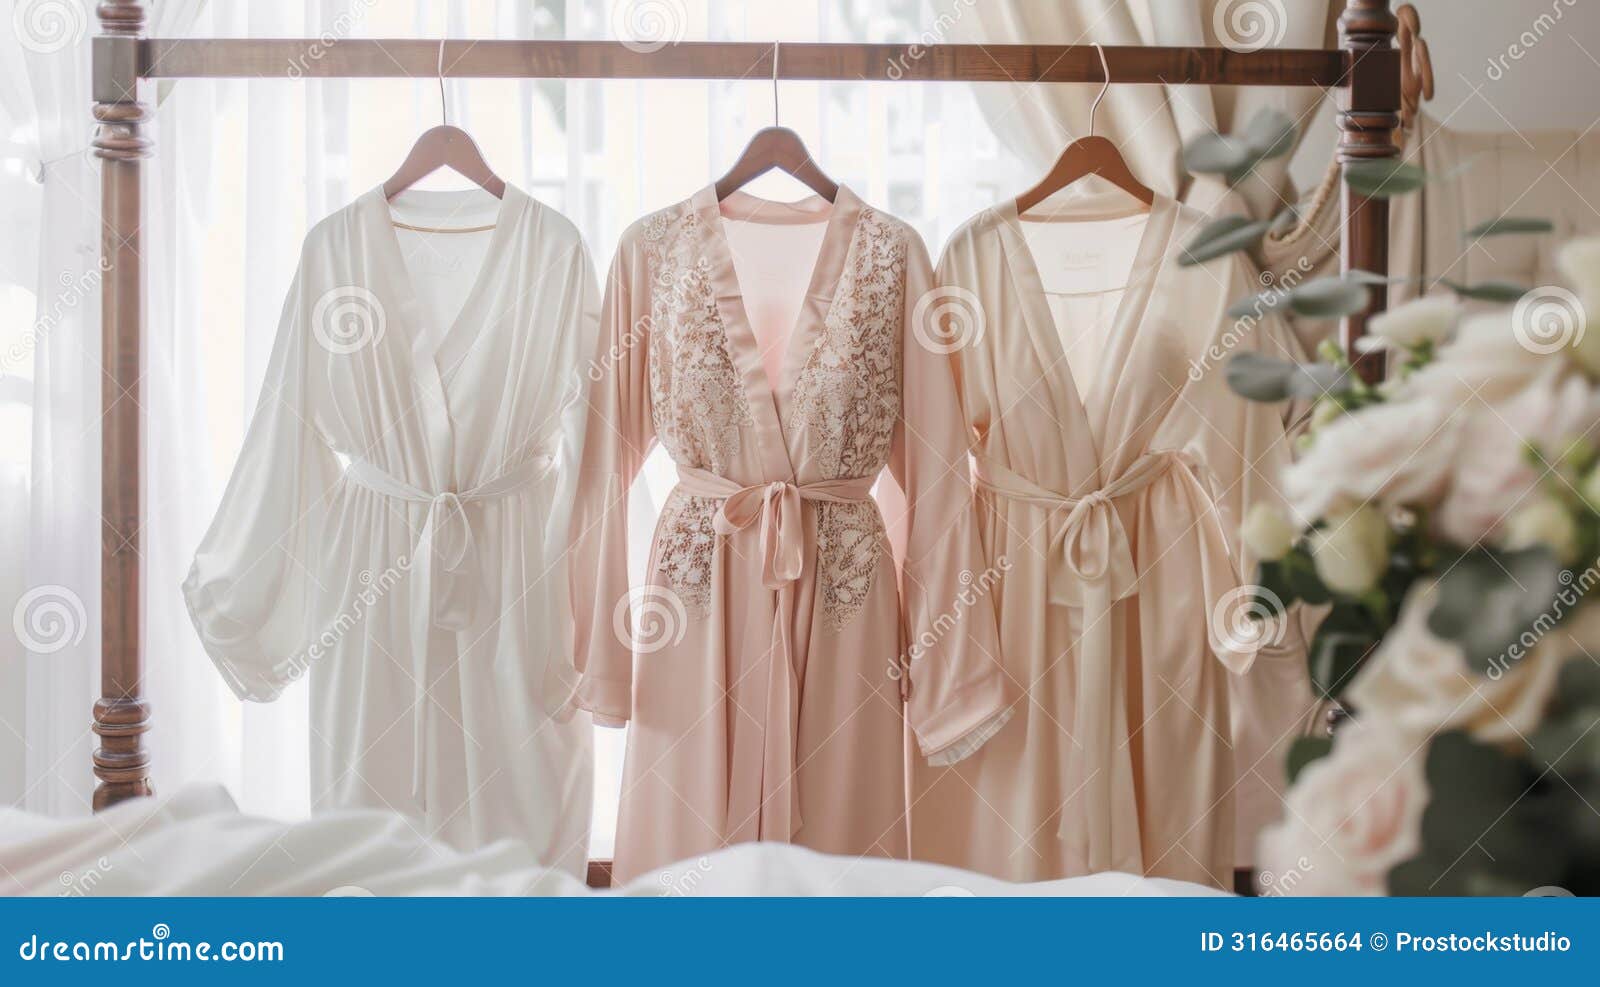 three robes hanging on bedroom rack